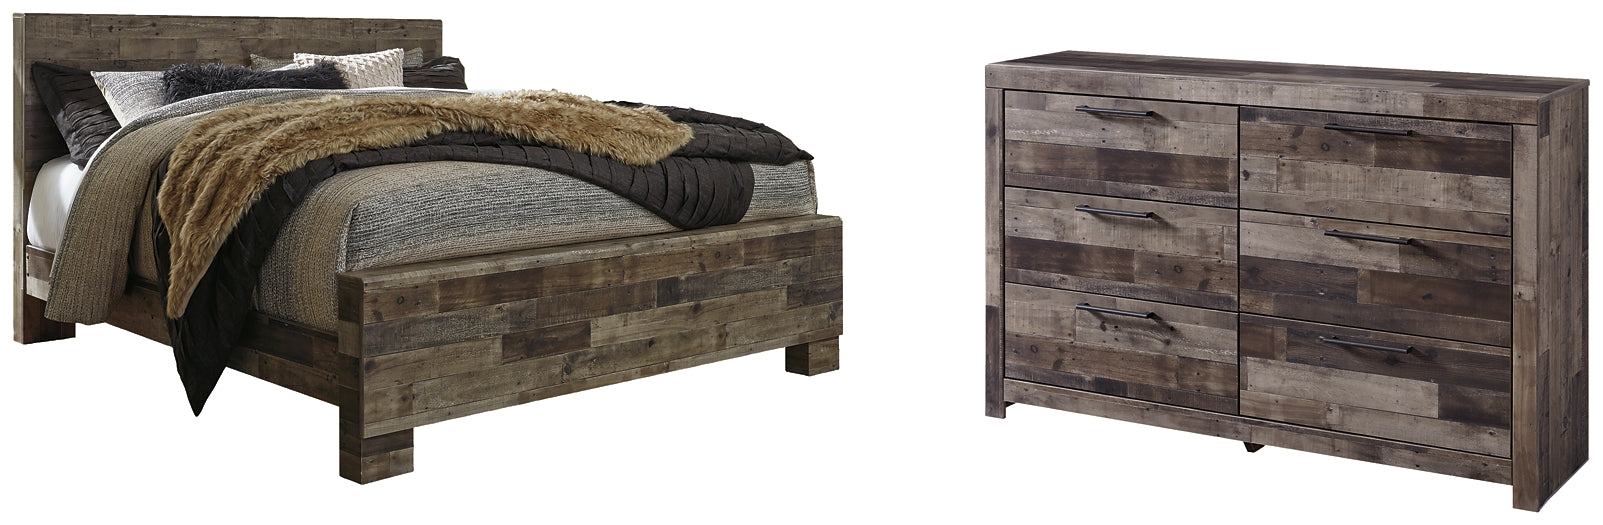 Derekson King Panel Bed with Dresser at Cloud 9 Mattress & Furniture furniture, home furnishing, home decor